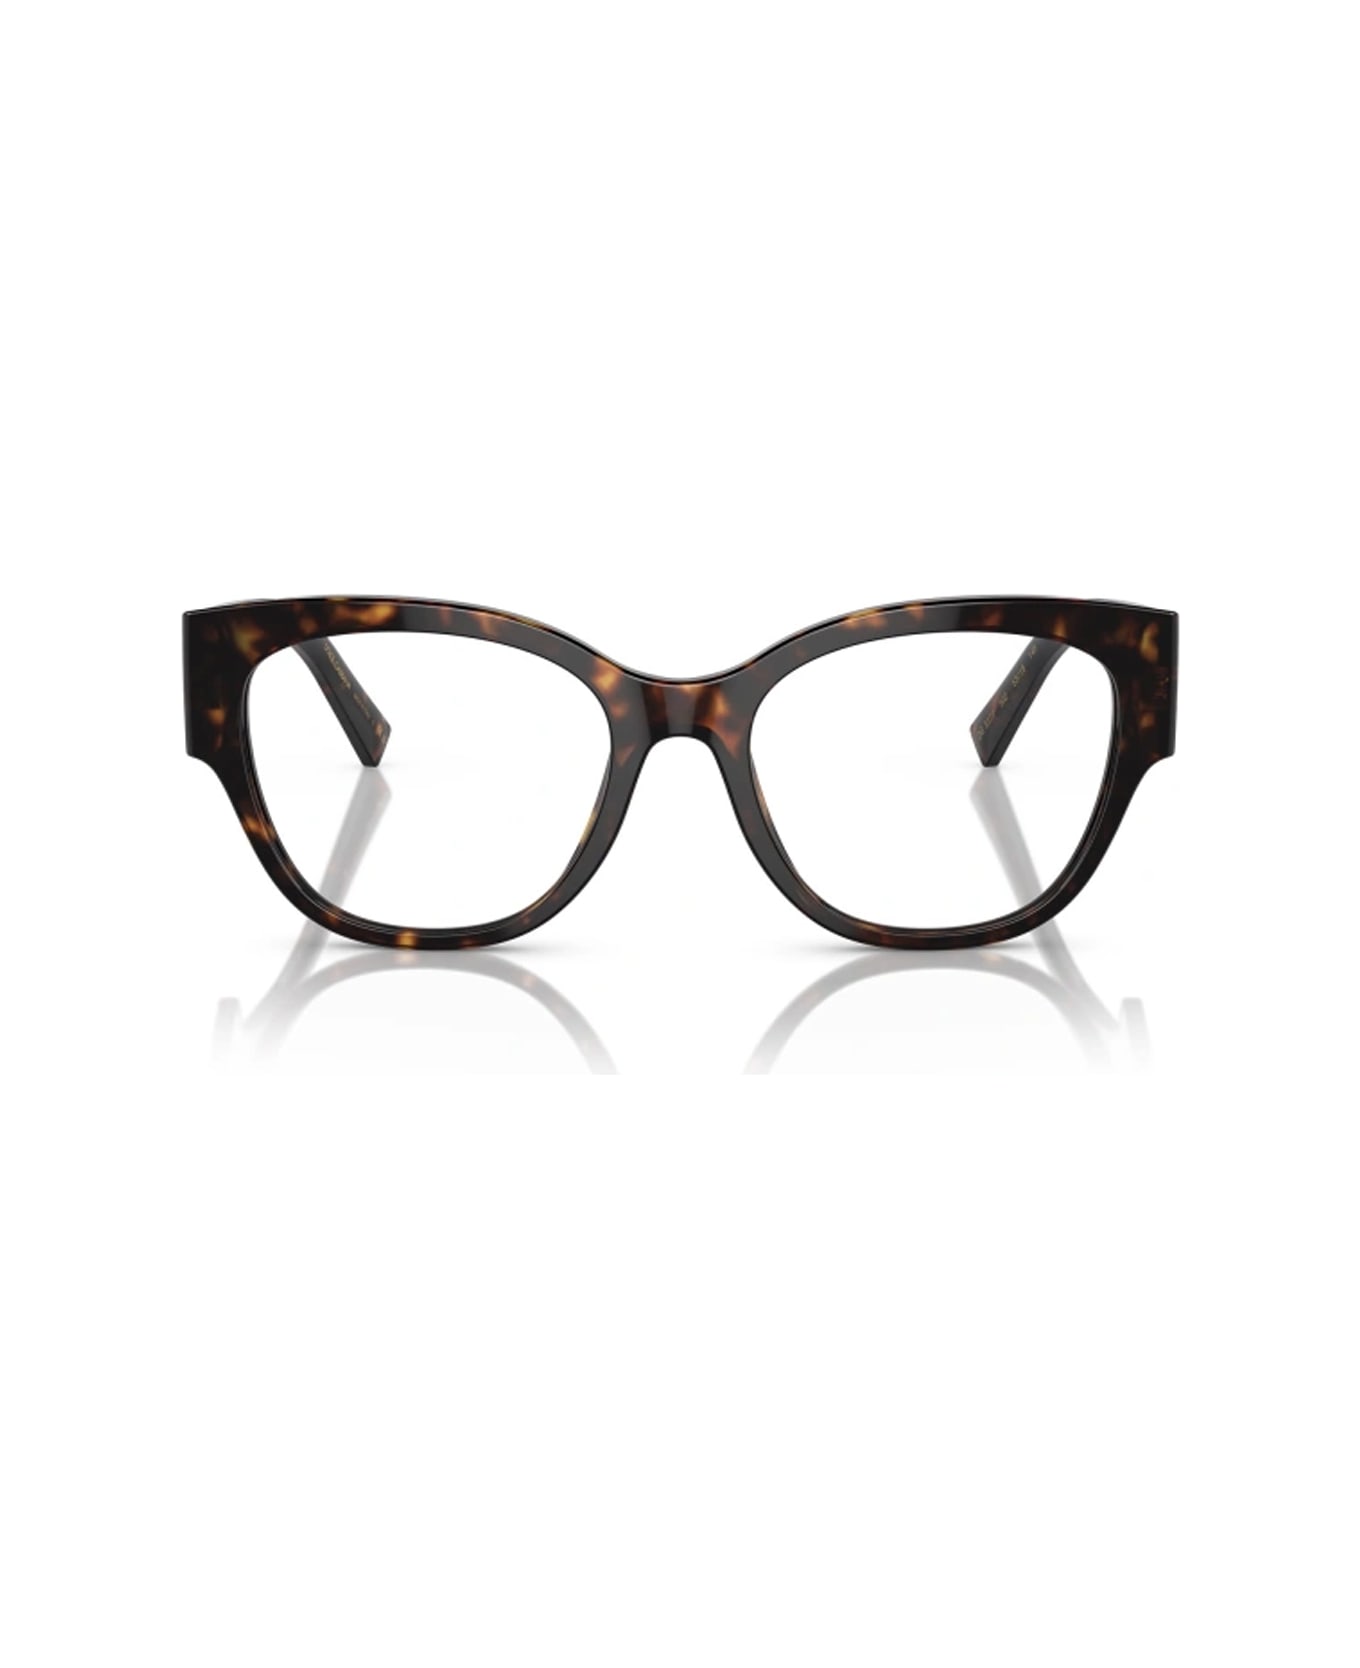 Dolce & Gabbana Eyewear Dg3377 502 Glasses - Marrone アイウェア